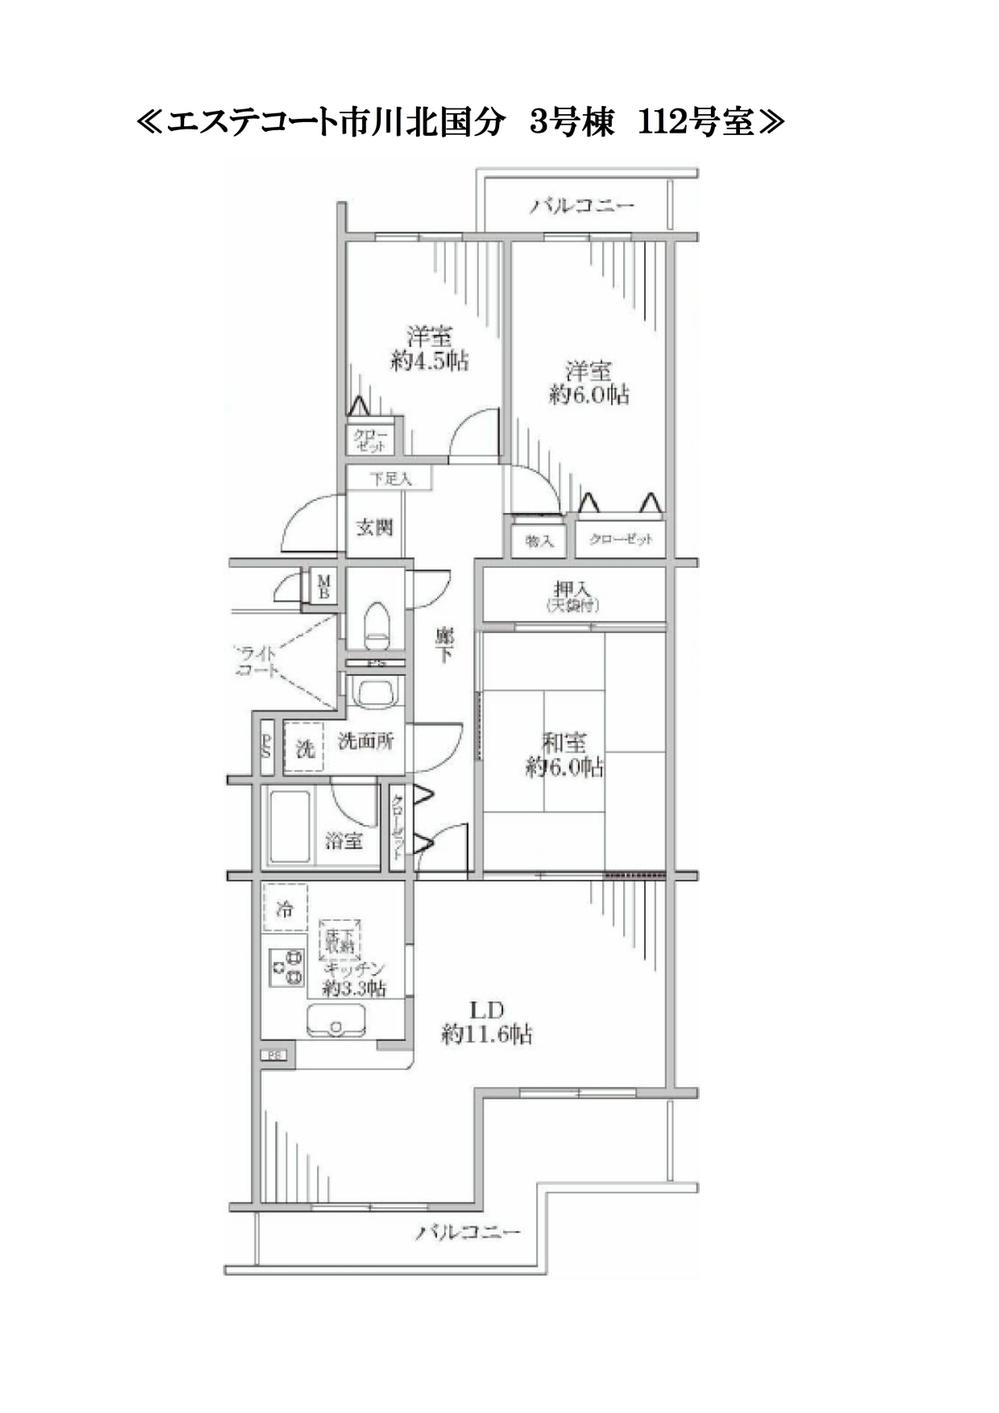 Floor plan. 3LDK, Price 17,990,000 yen, Occupied area 71.53 sq m , Balcony area 11.65 sq m